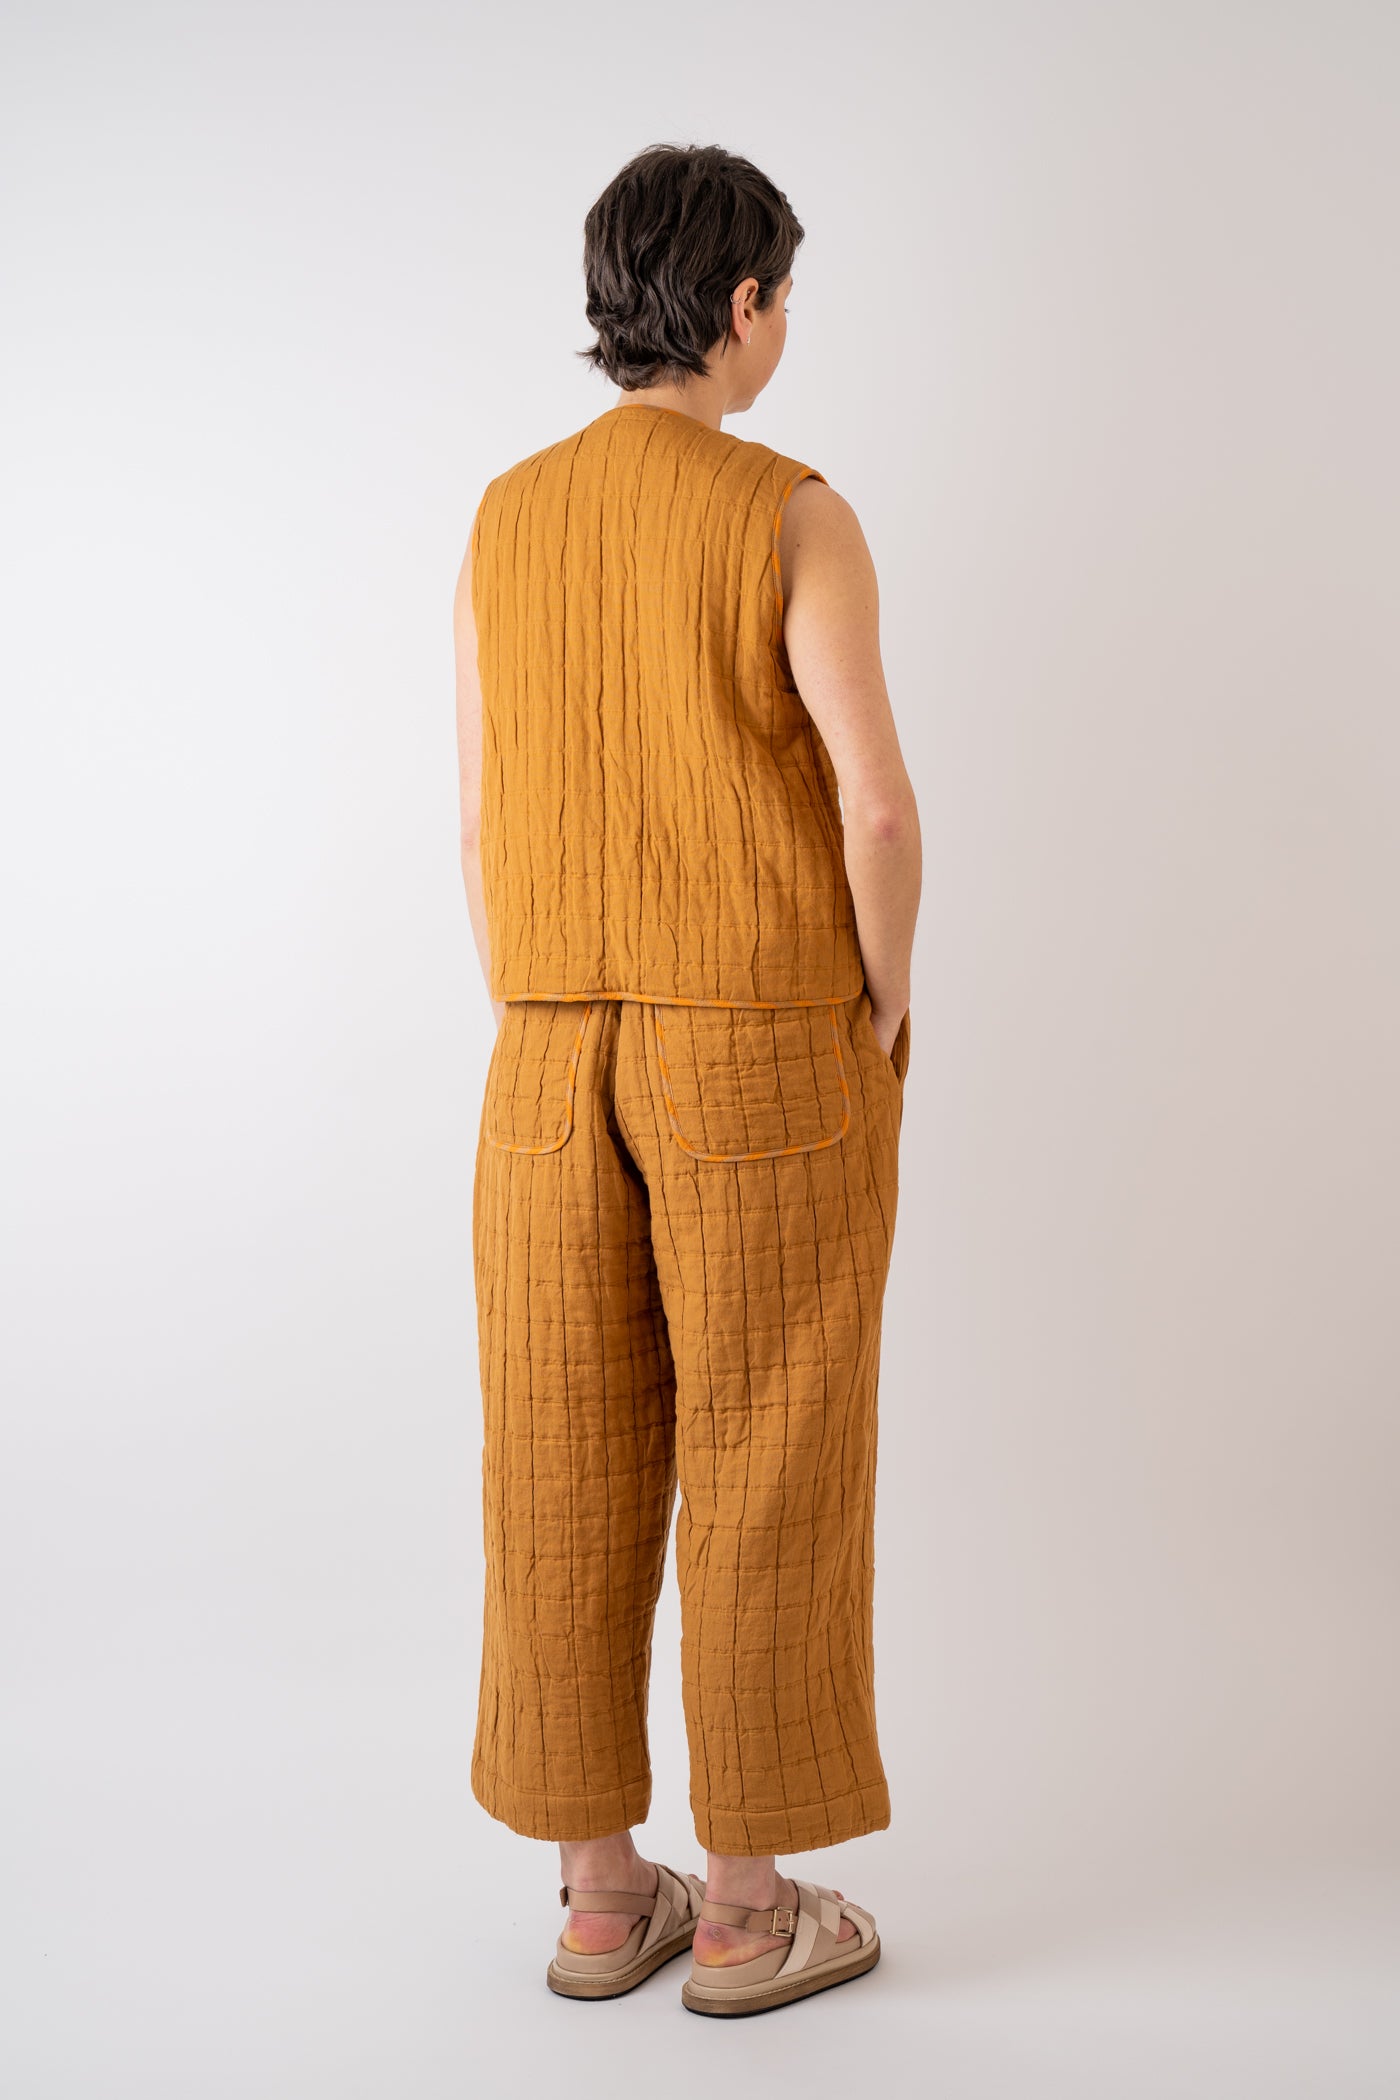 Cawley Studio Indian Jacquard Cotton and Irish Stripe Linen Ella Vest handmade in London styled with Cawley Studio Unisex Trouser in Burnt Orange